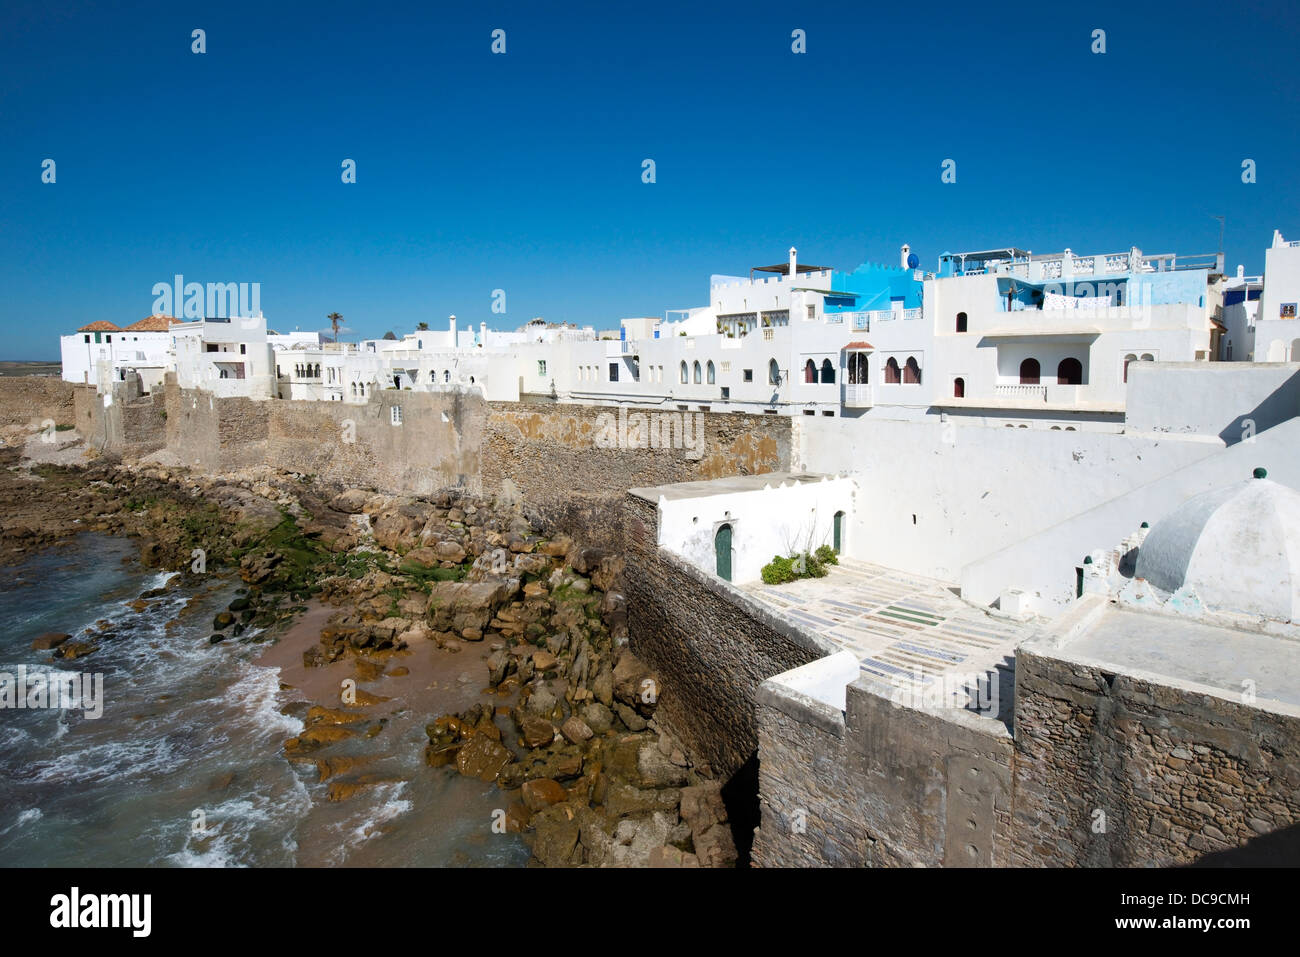 Der Küstenort Asilah, Marokko. Stockfoto